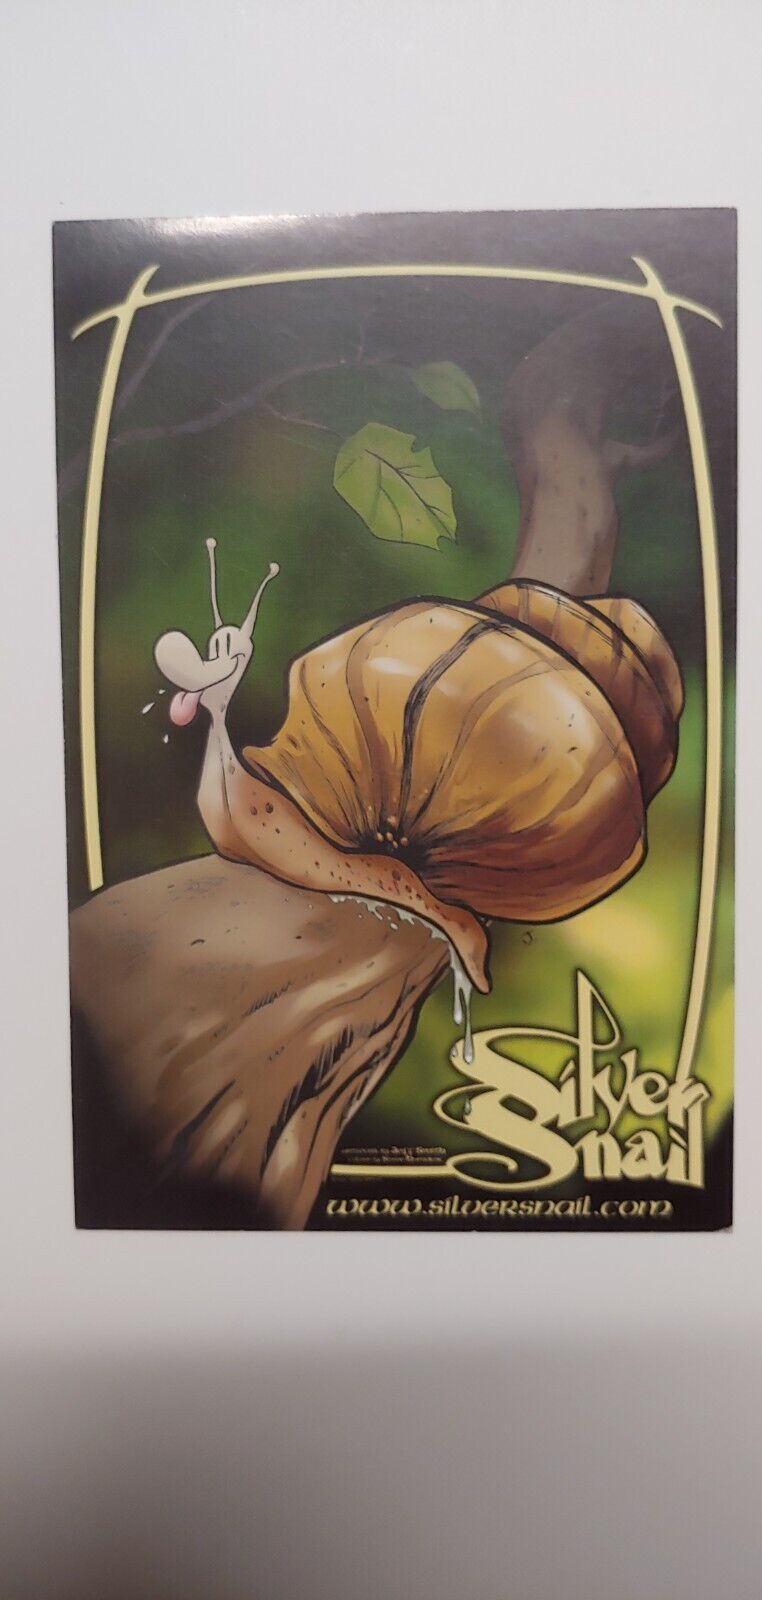 Jeff Smith\'s Bone Smiley Bone Silver Snail Comic Shop Promo Postcard 2002 Unused